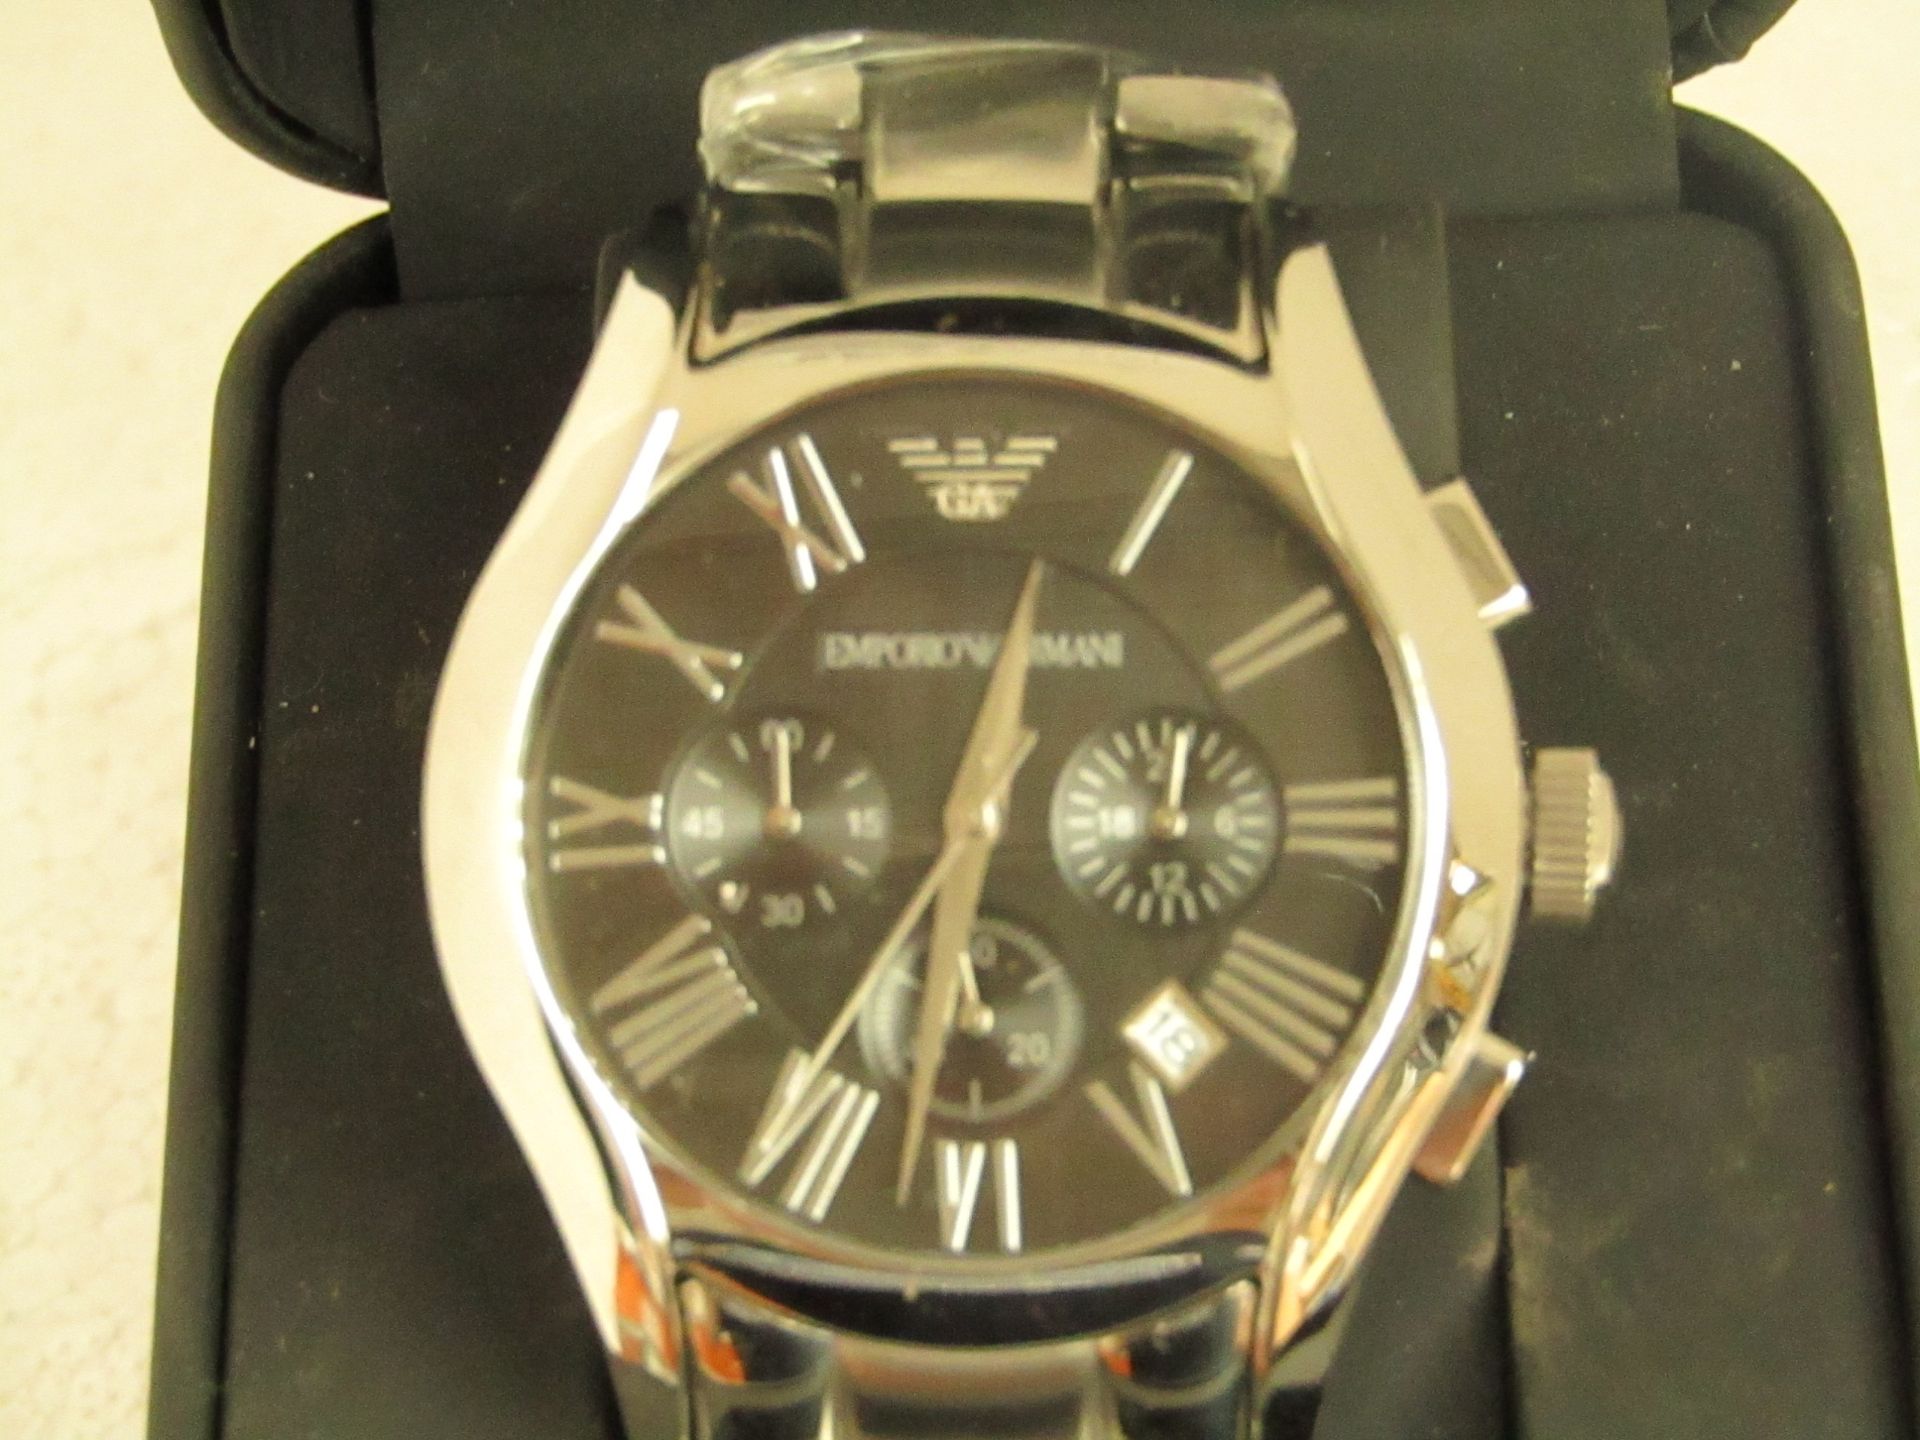 Emporio Armani AR0673 watch, new and ticking in presentation box.